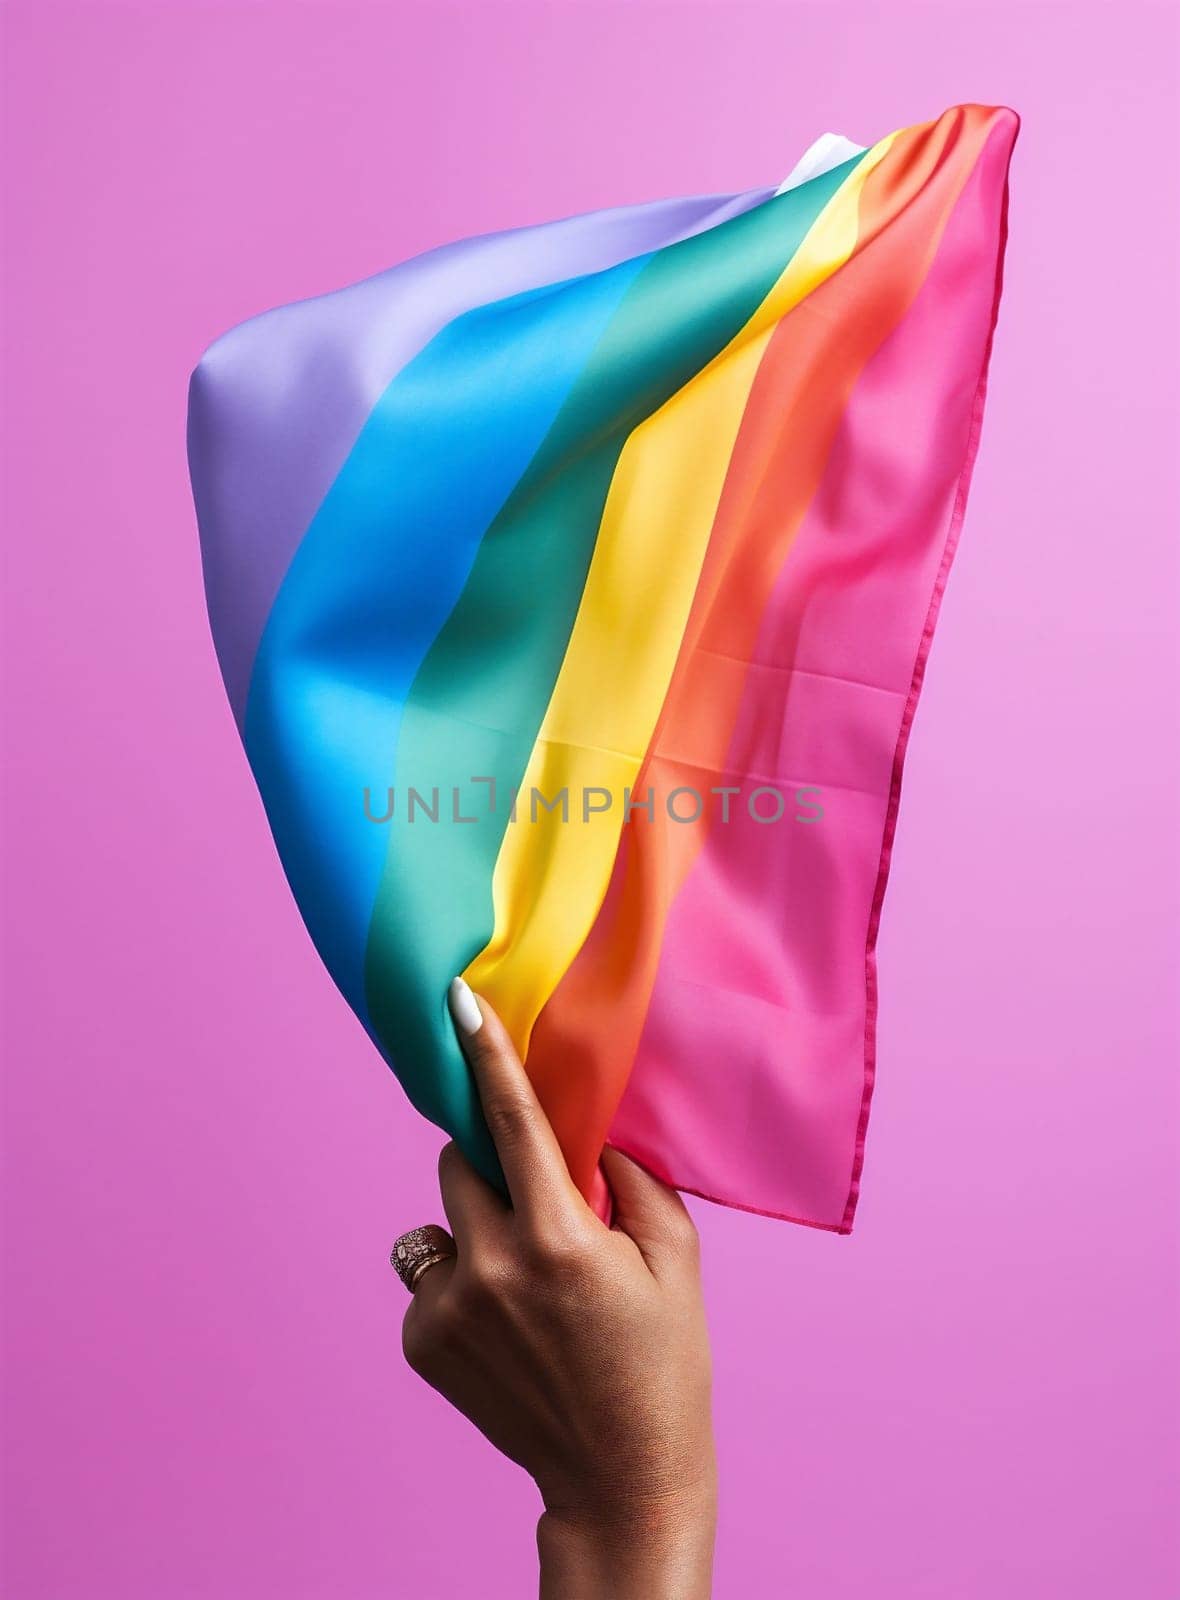 Flag rainbow lgbtq symbol equality lgbt pride homosexual tolerance transgender human freedom rights gay bisexual gender love lesbian marriage